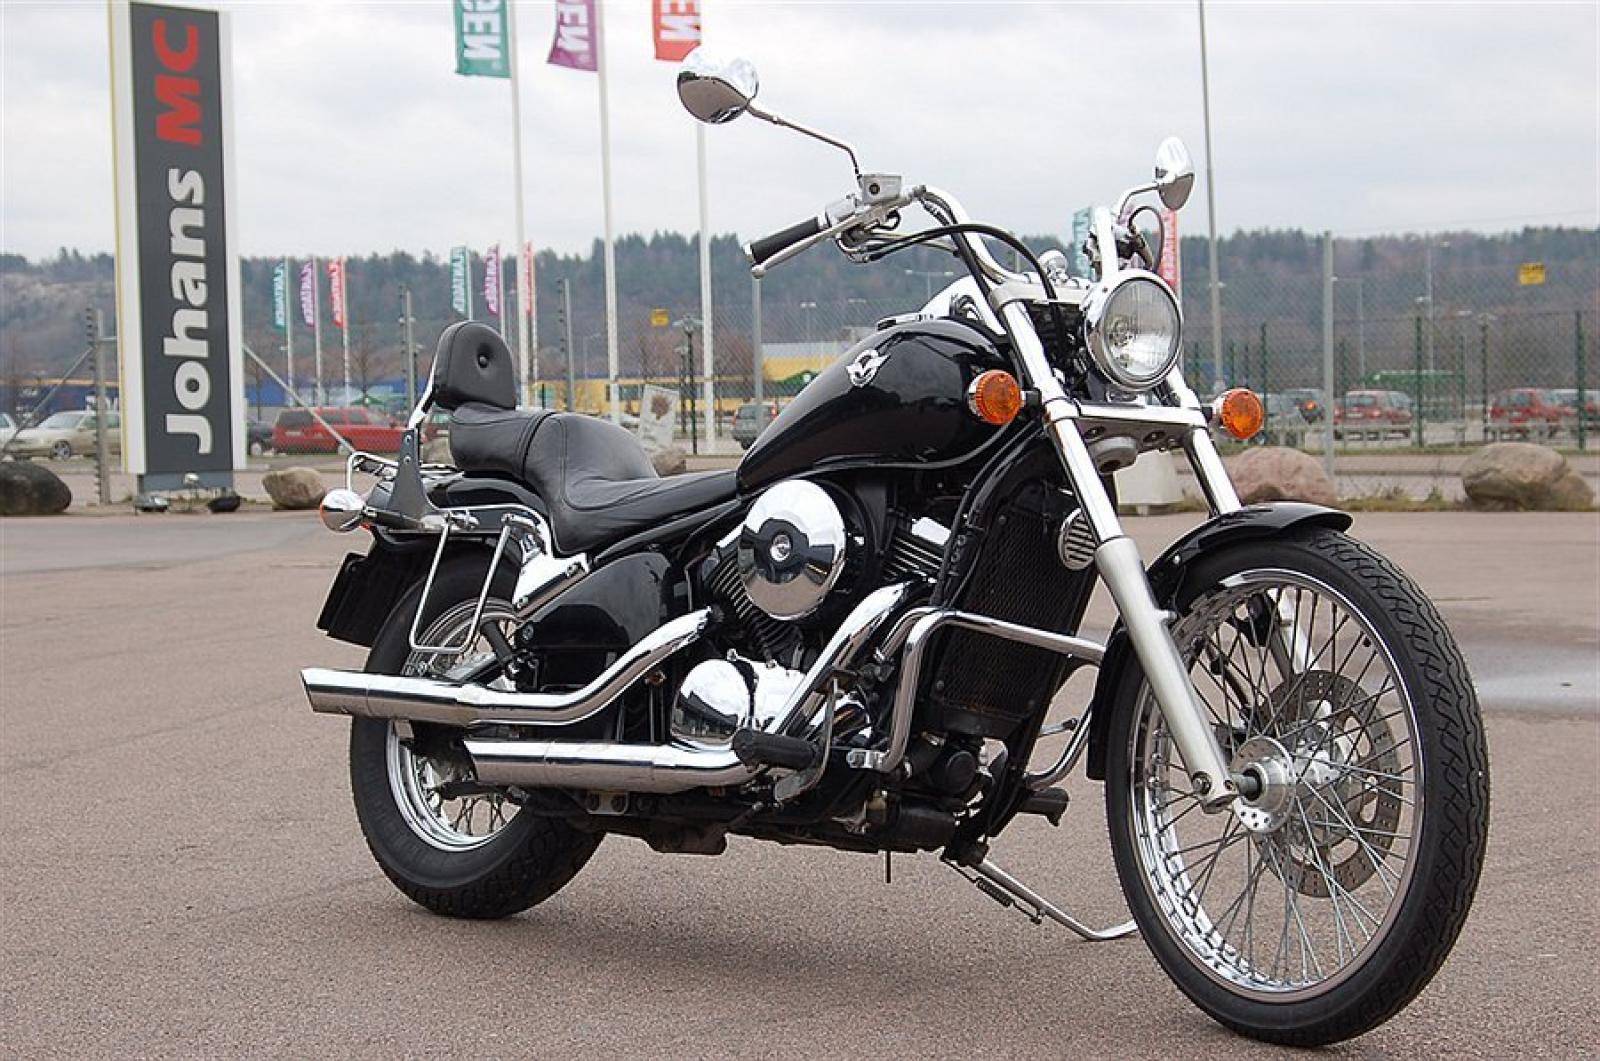 Kawasaki vn800 (vulcan): review, history, specs - bikeswiki.com, japanese motorcycle encyclopedia